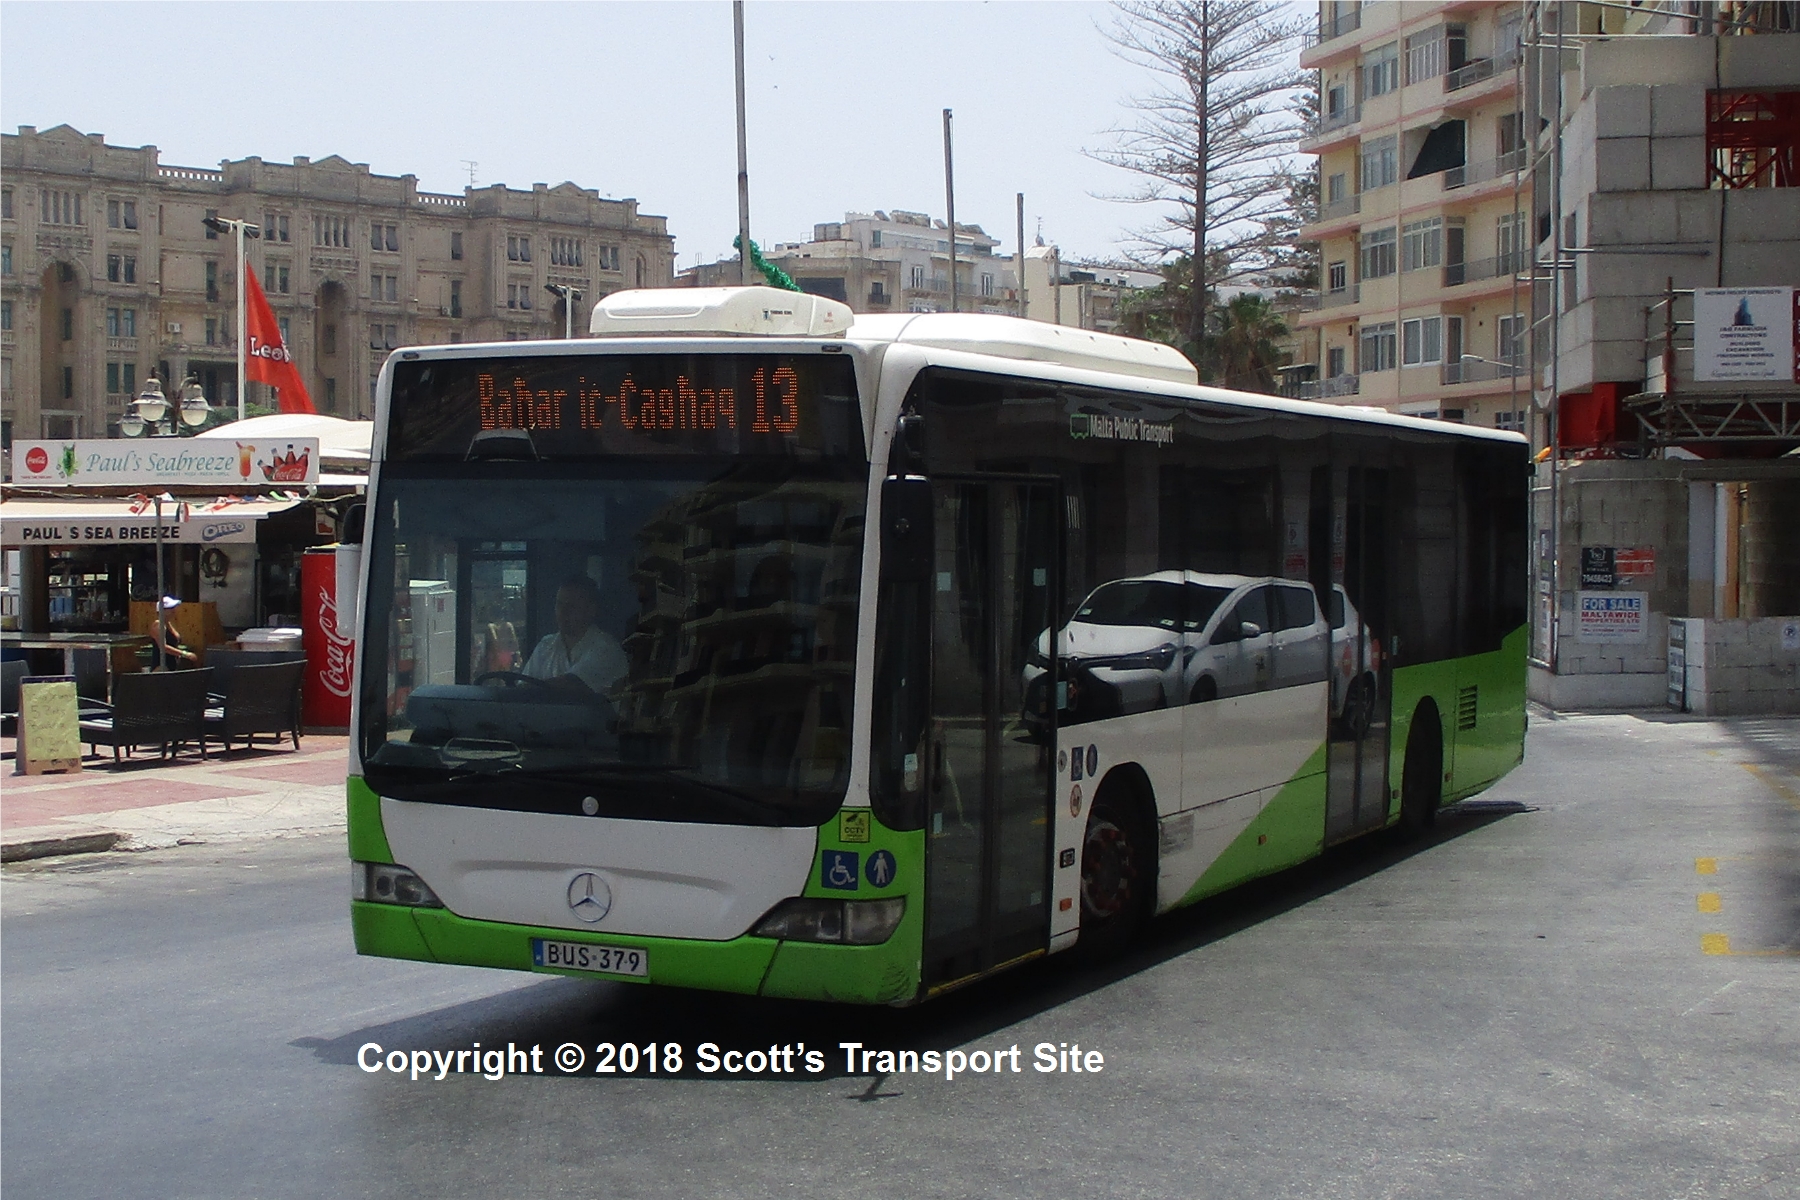 Malta Public Transport